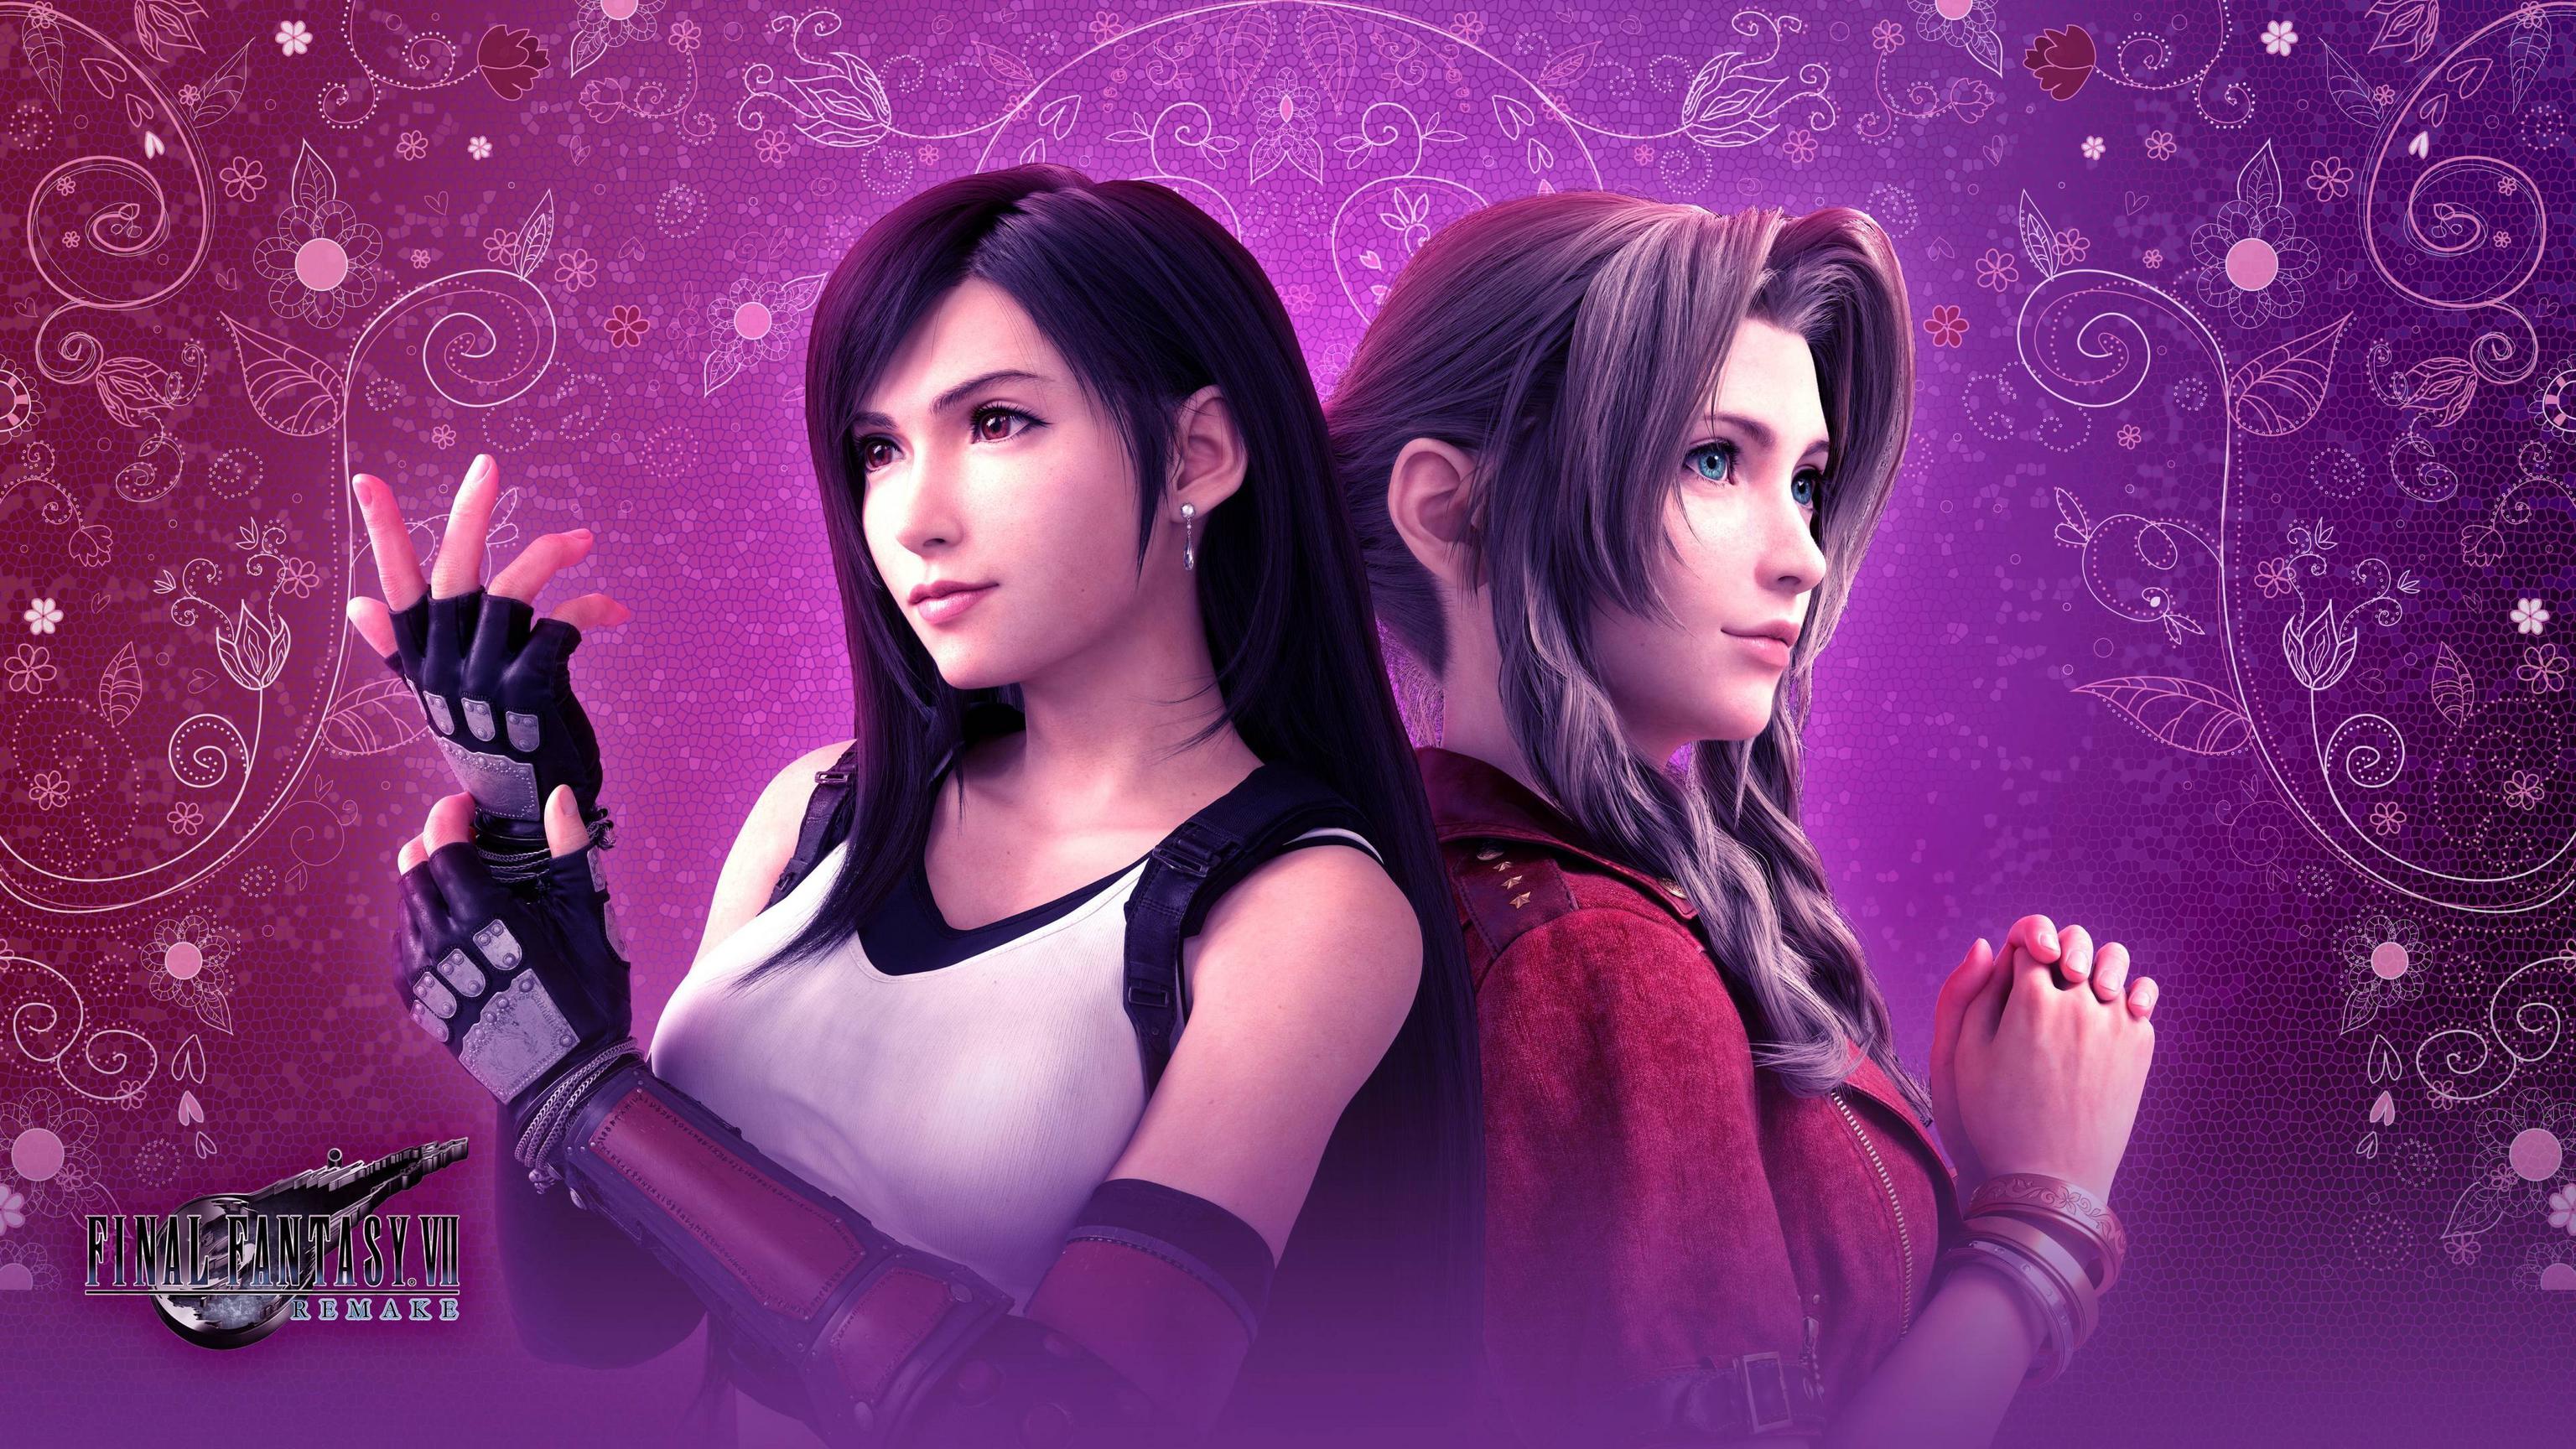 HD desktop wallpaper Women Tifa Lockhart Final Fantasy Vii Cosplay  download free picture 854135